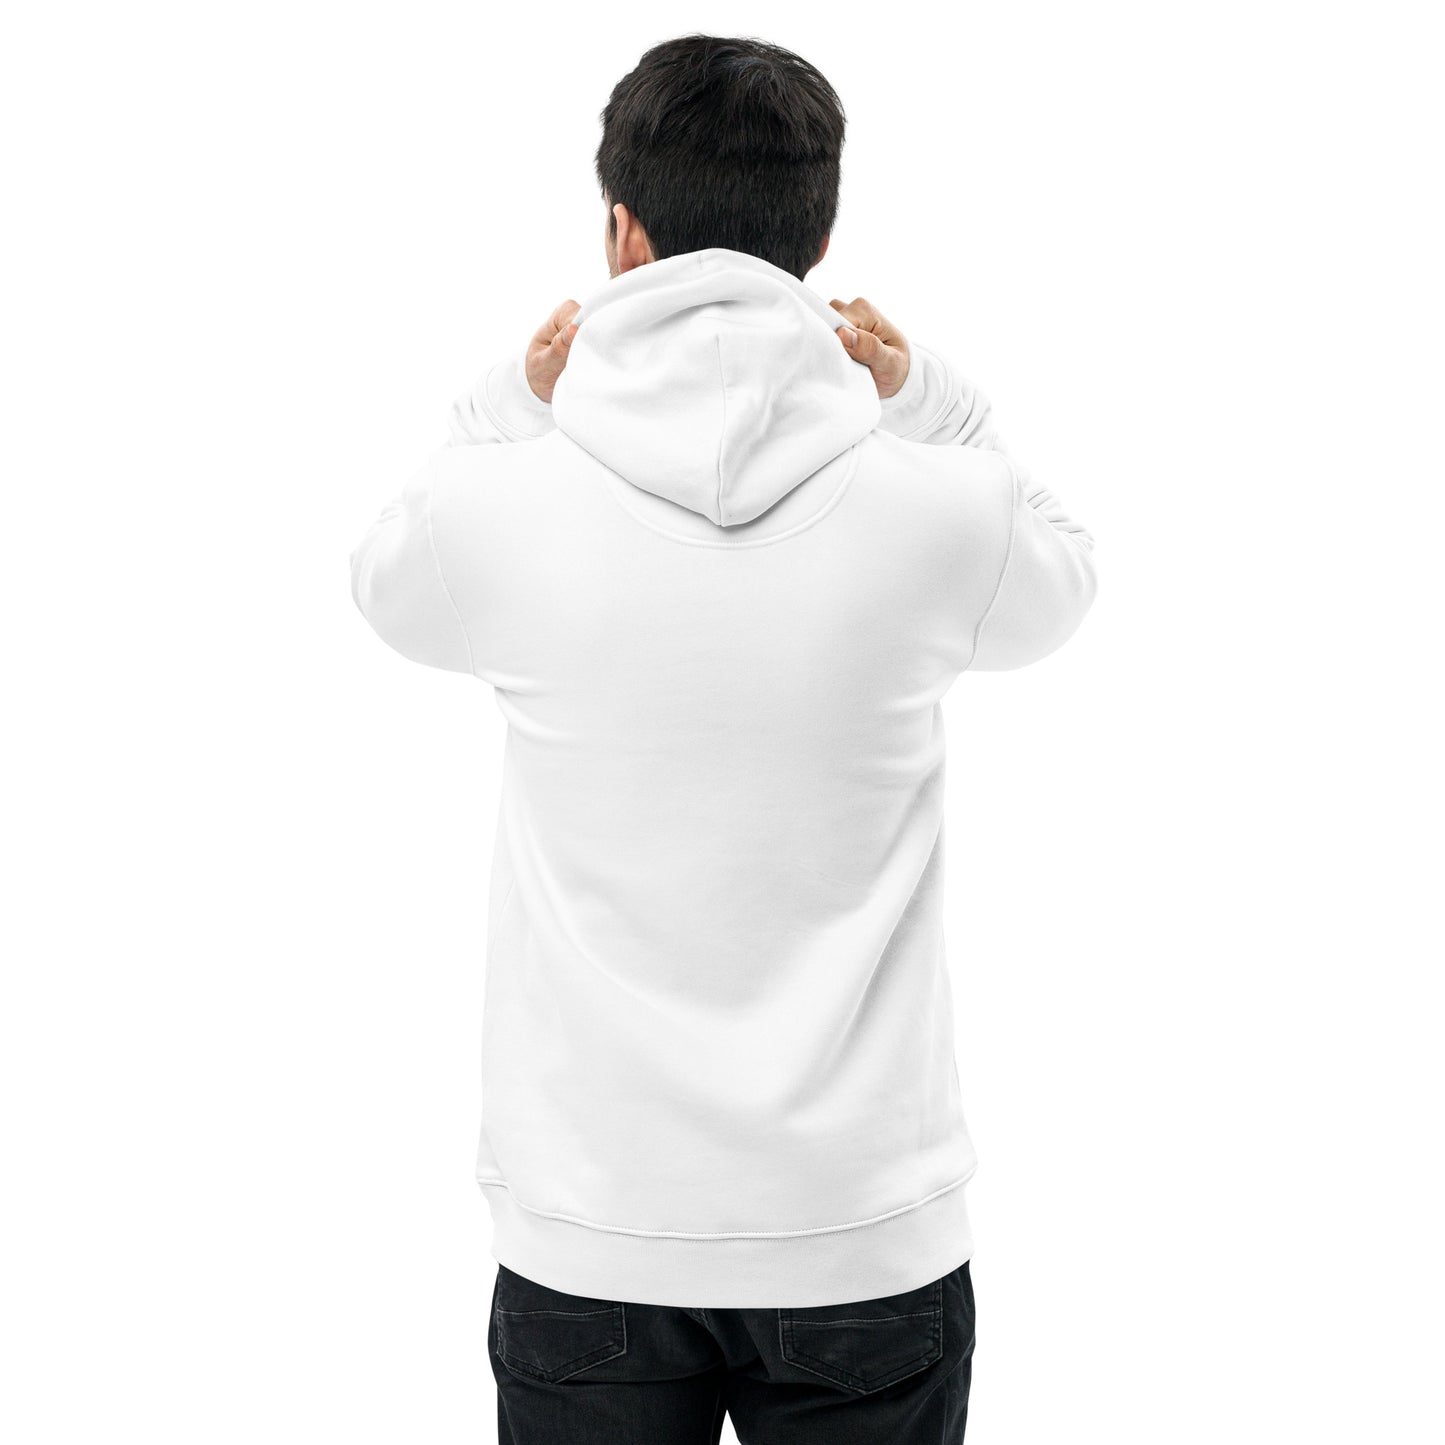 Slow & Steady- Unisex organic hoodie